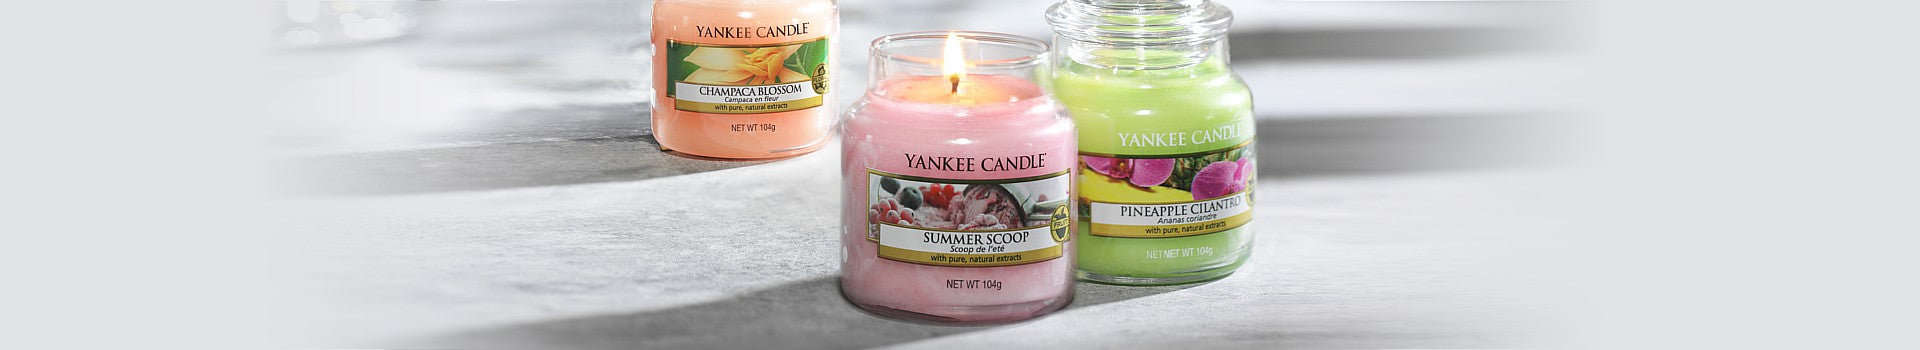 Yankee Candle Small Jars